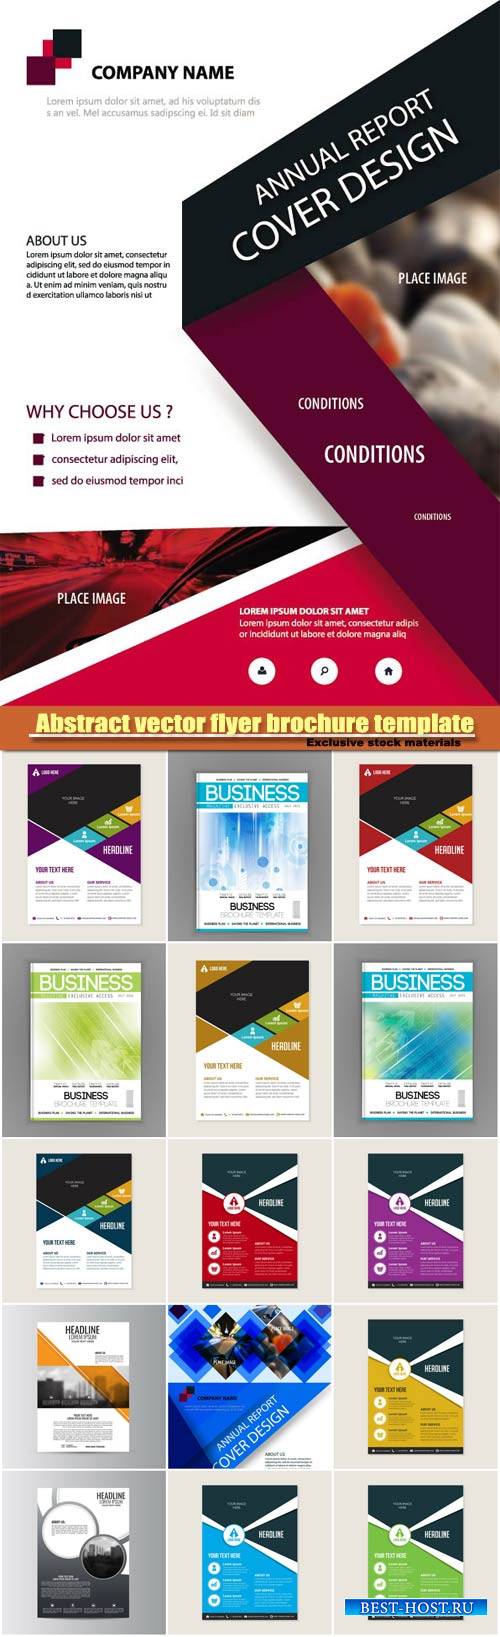 Abstract vector flyer brochure template design background